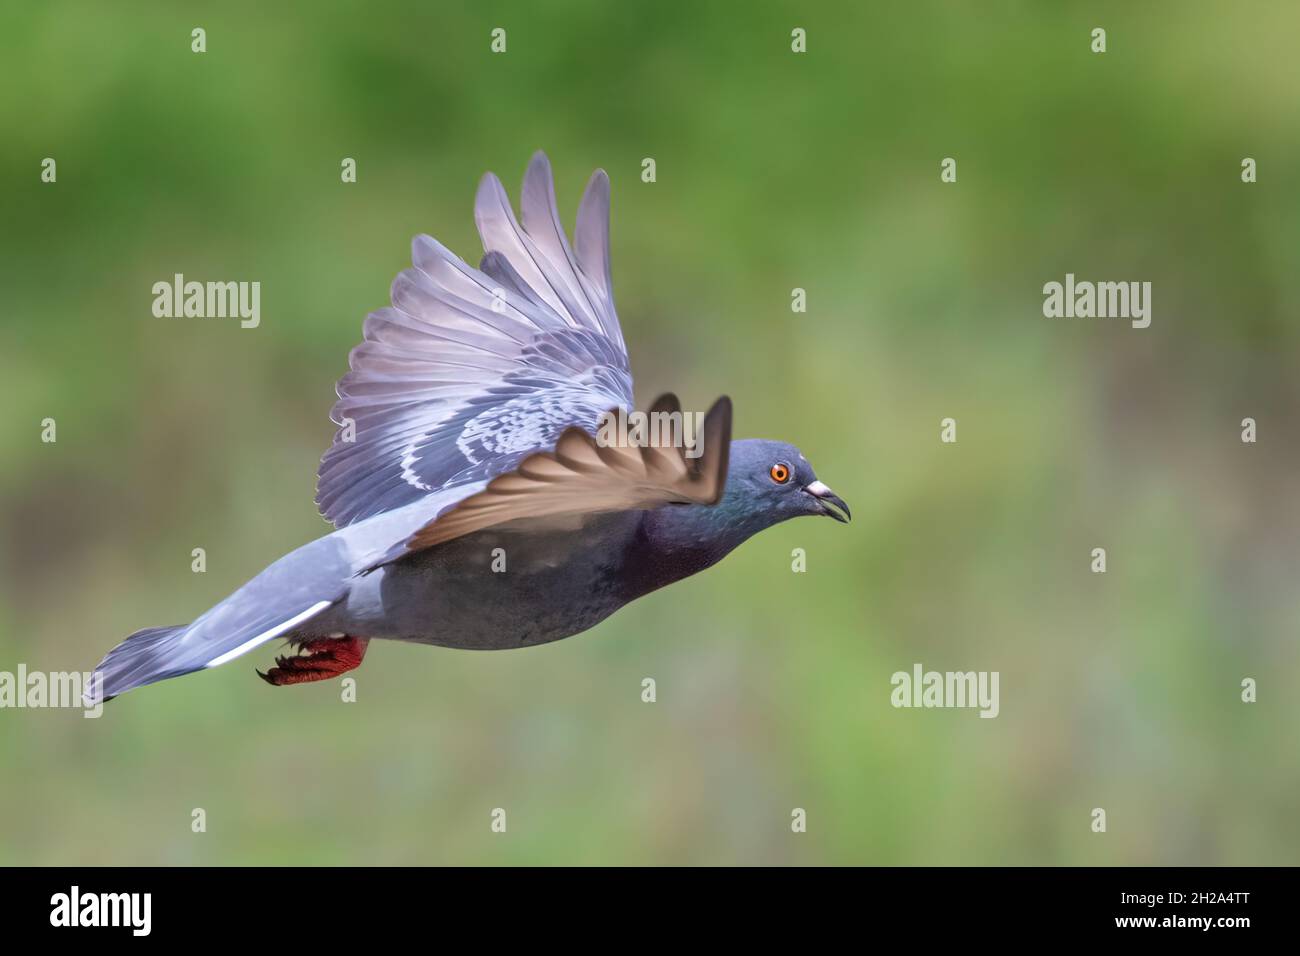 Image of pigeon flying on nature background. Bird, Animals. Stock Photo